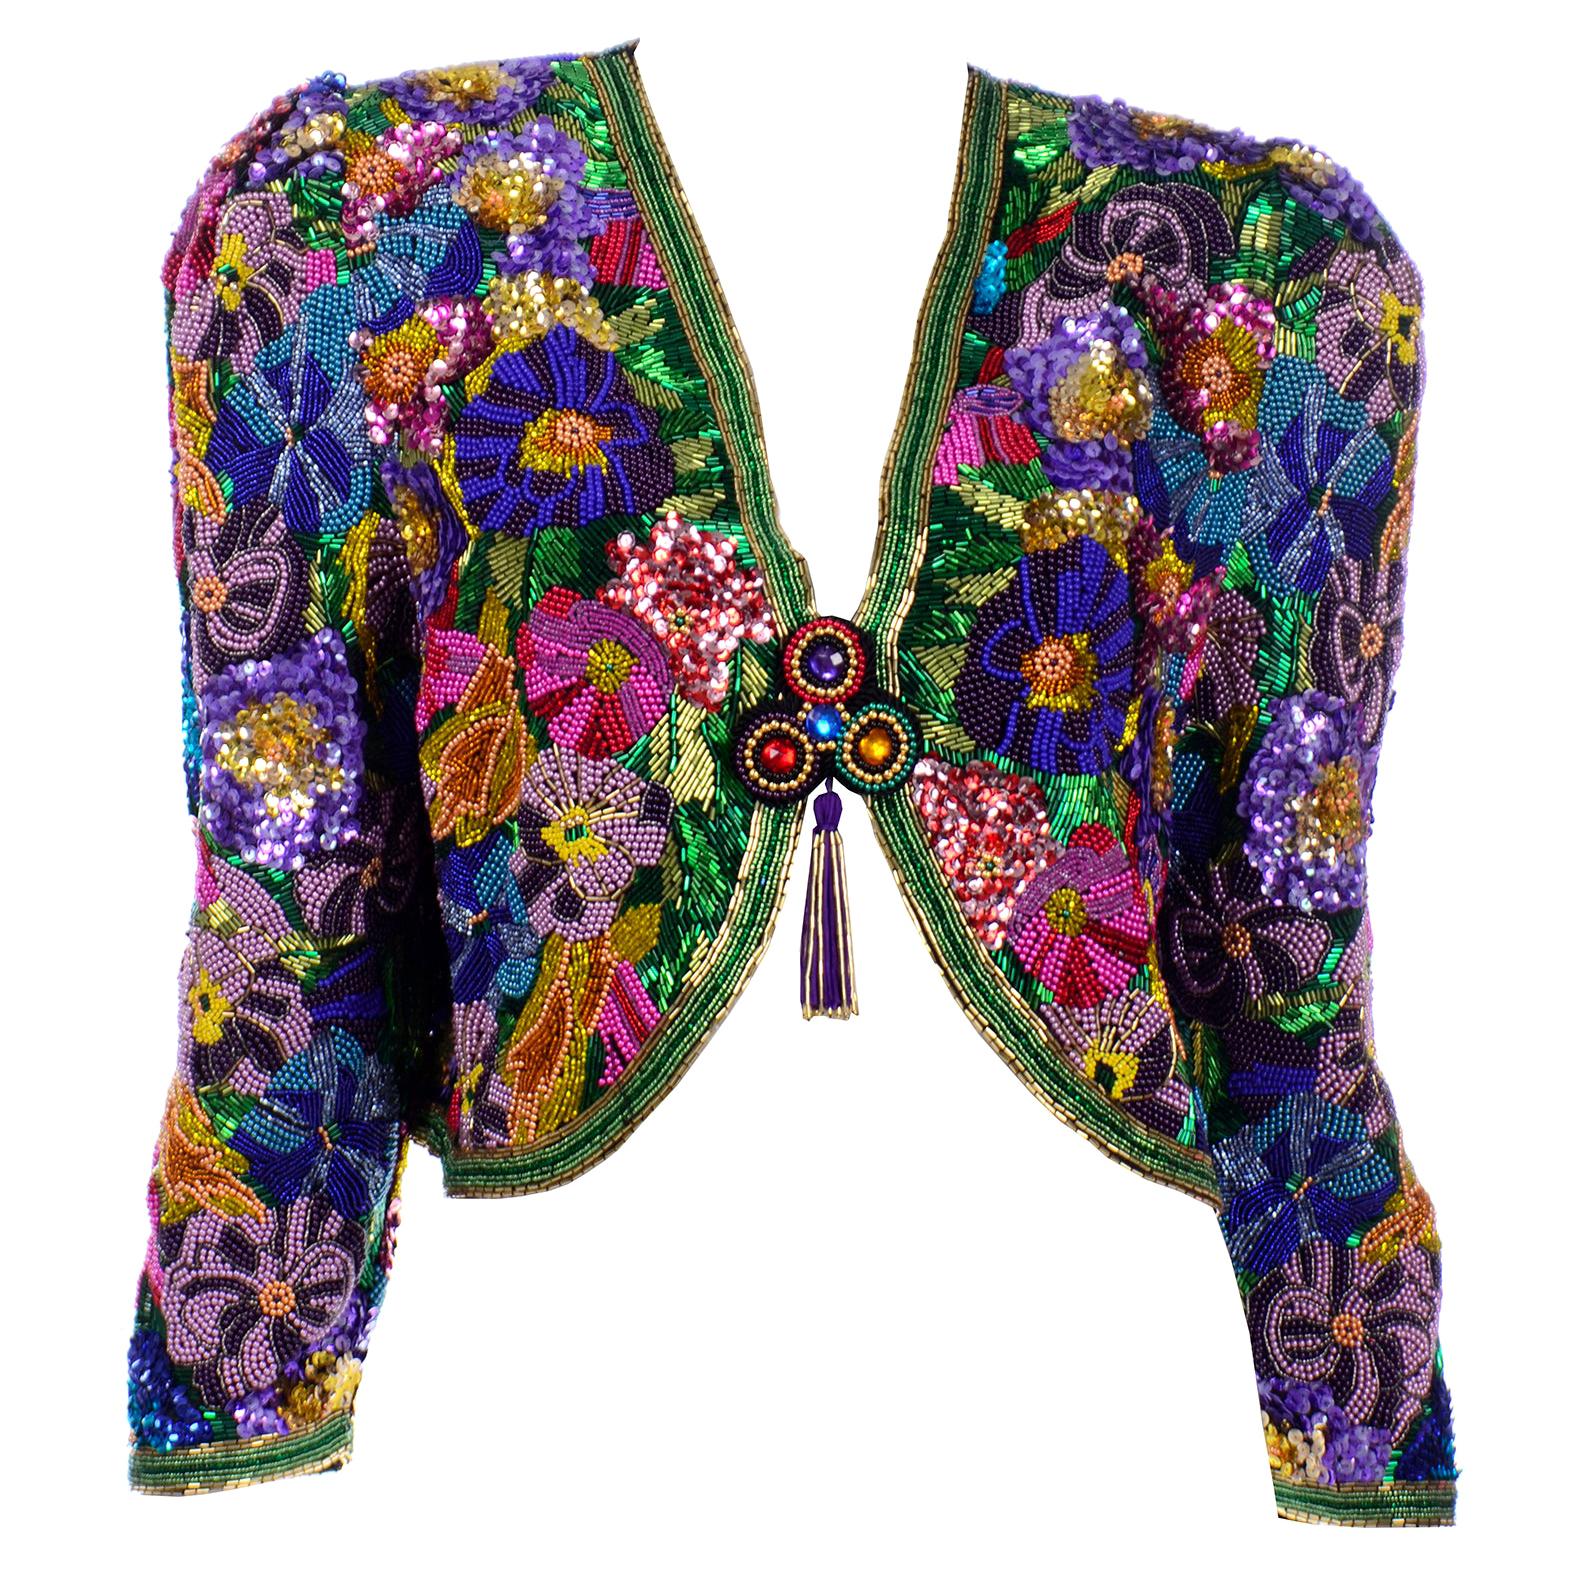 Diane Freis Vintage Heavily Beaded Colorful Floral Cropped Evening Bolero Jacket